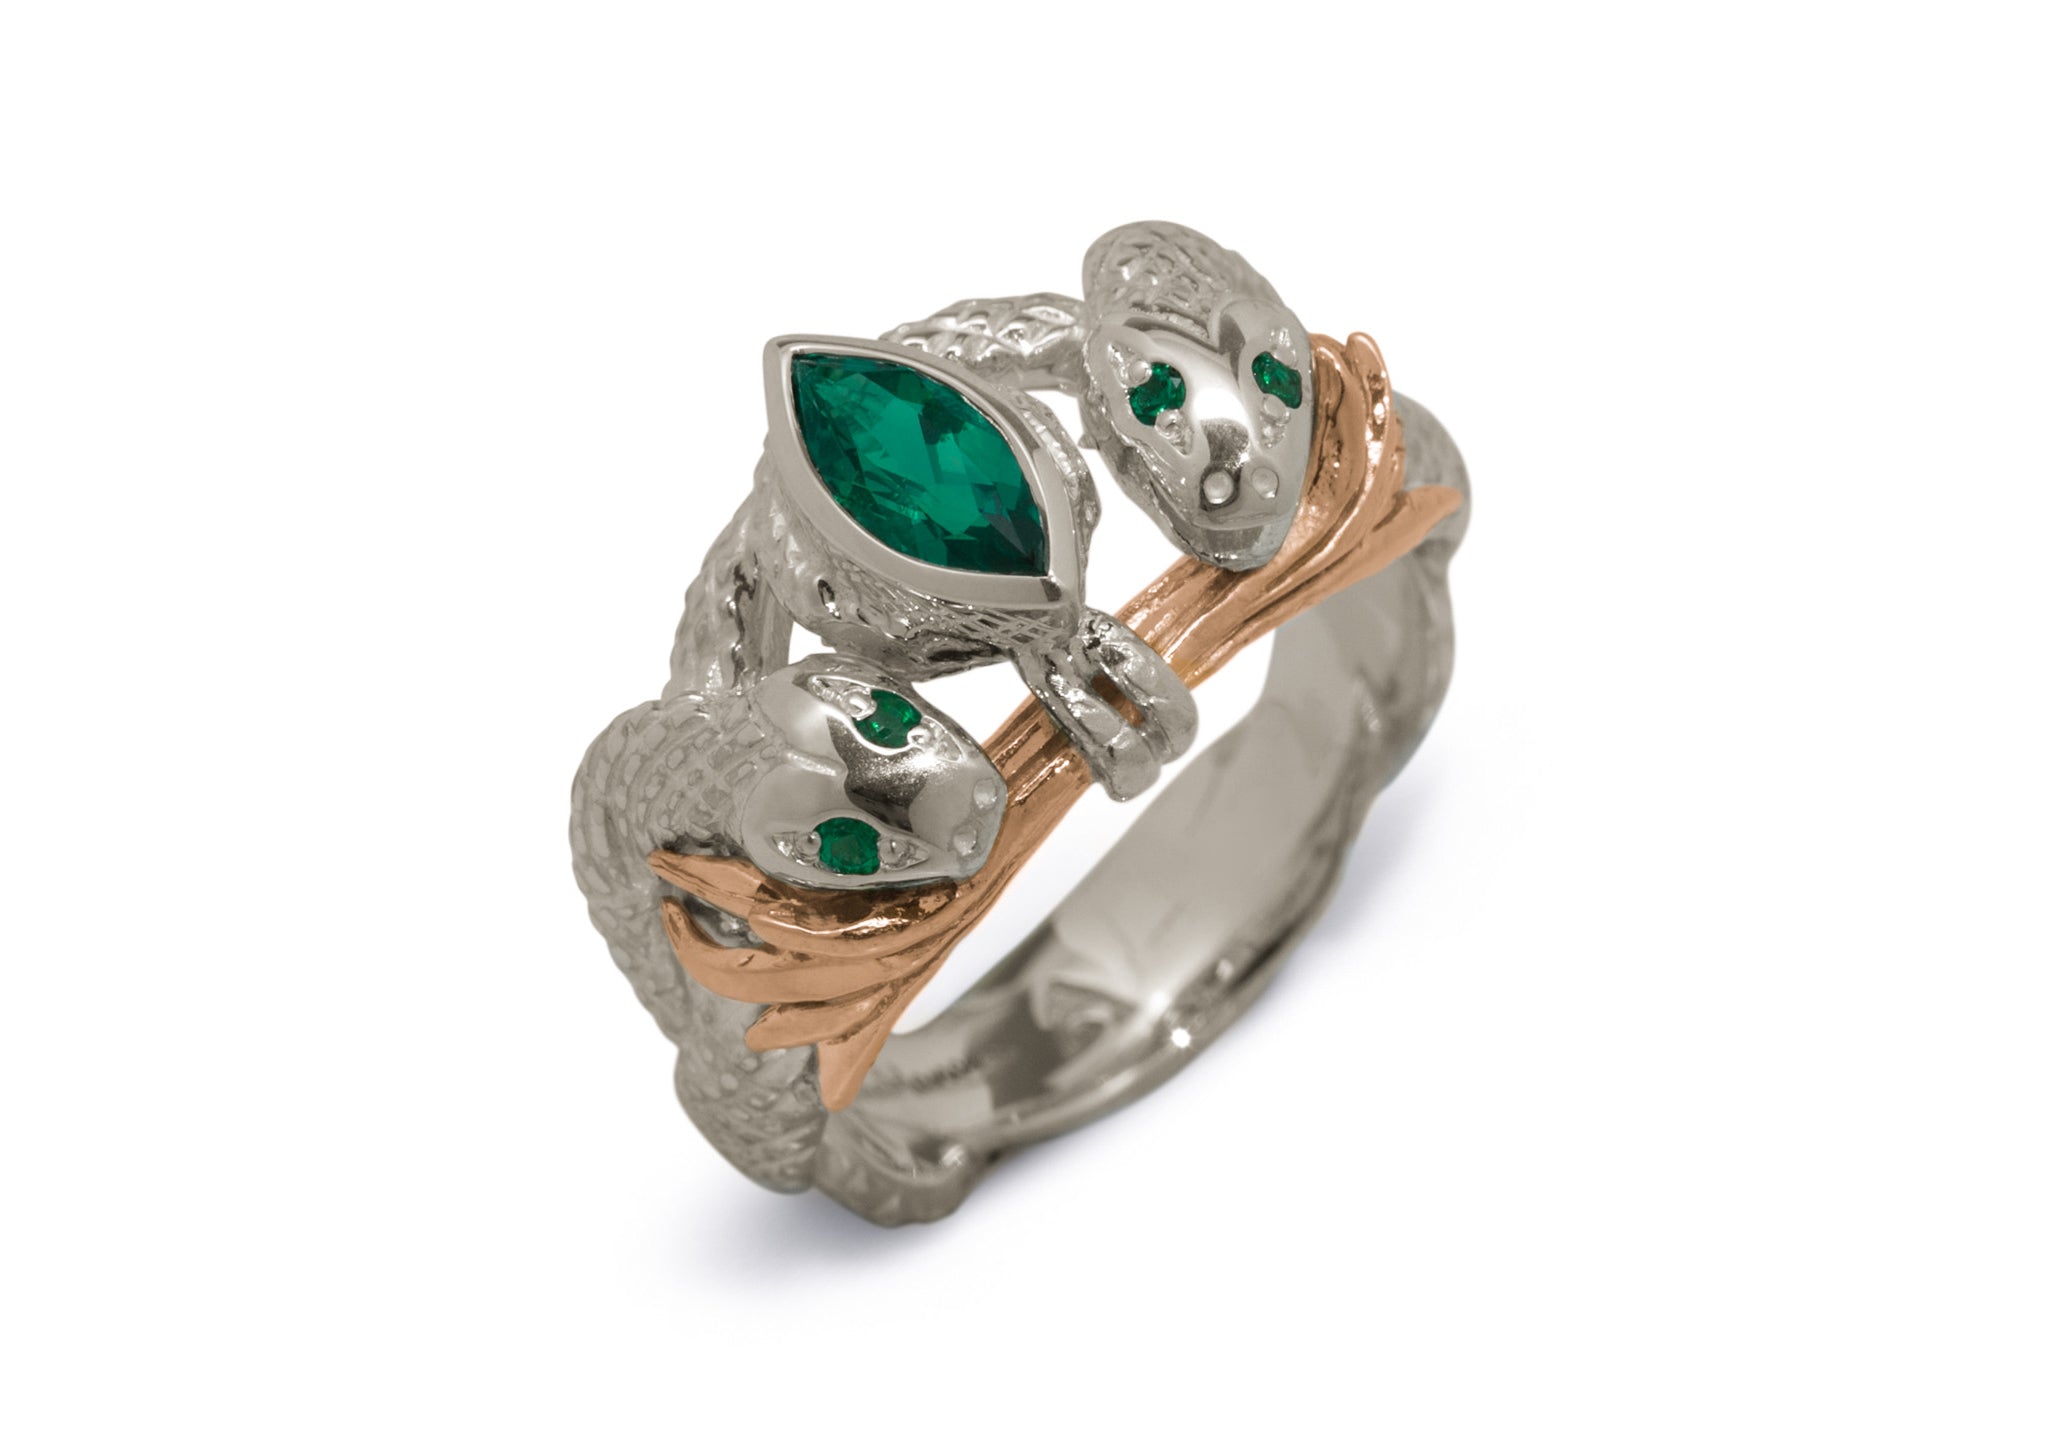 Metals & Gems Jewelry Studio - Rhodium Plating Solution makes